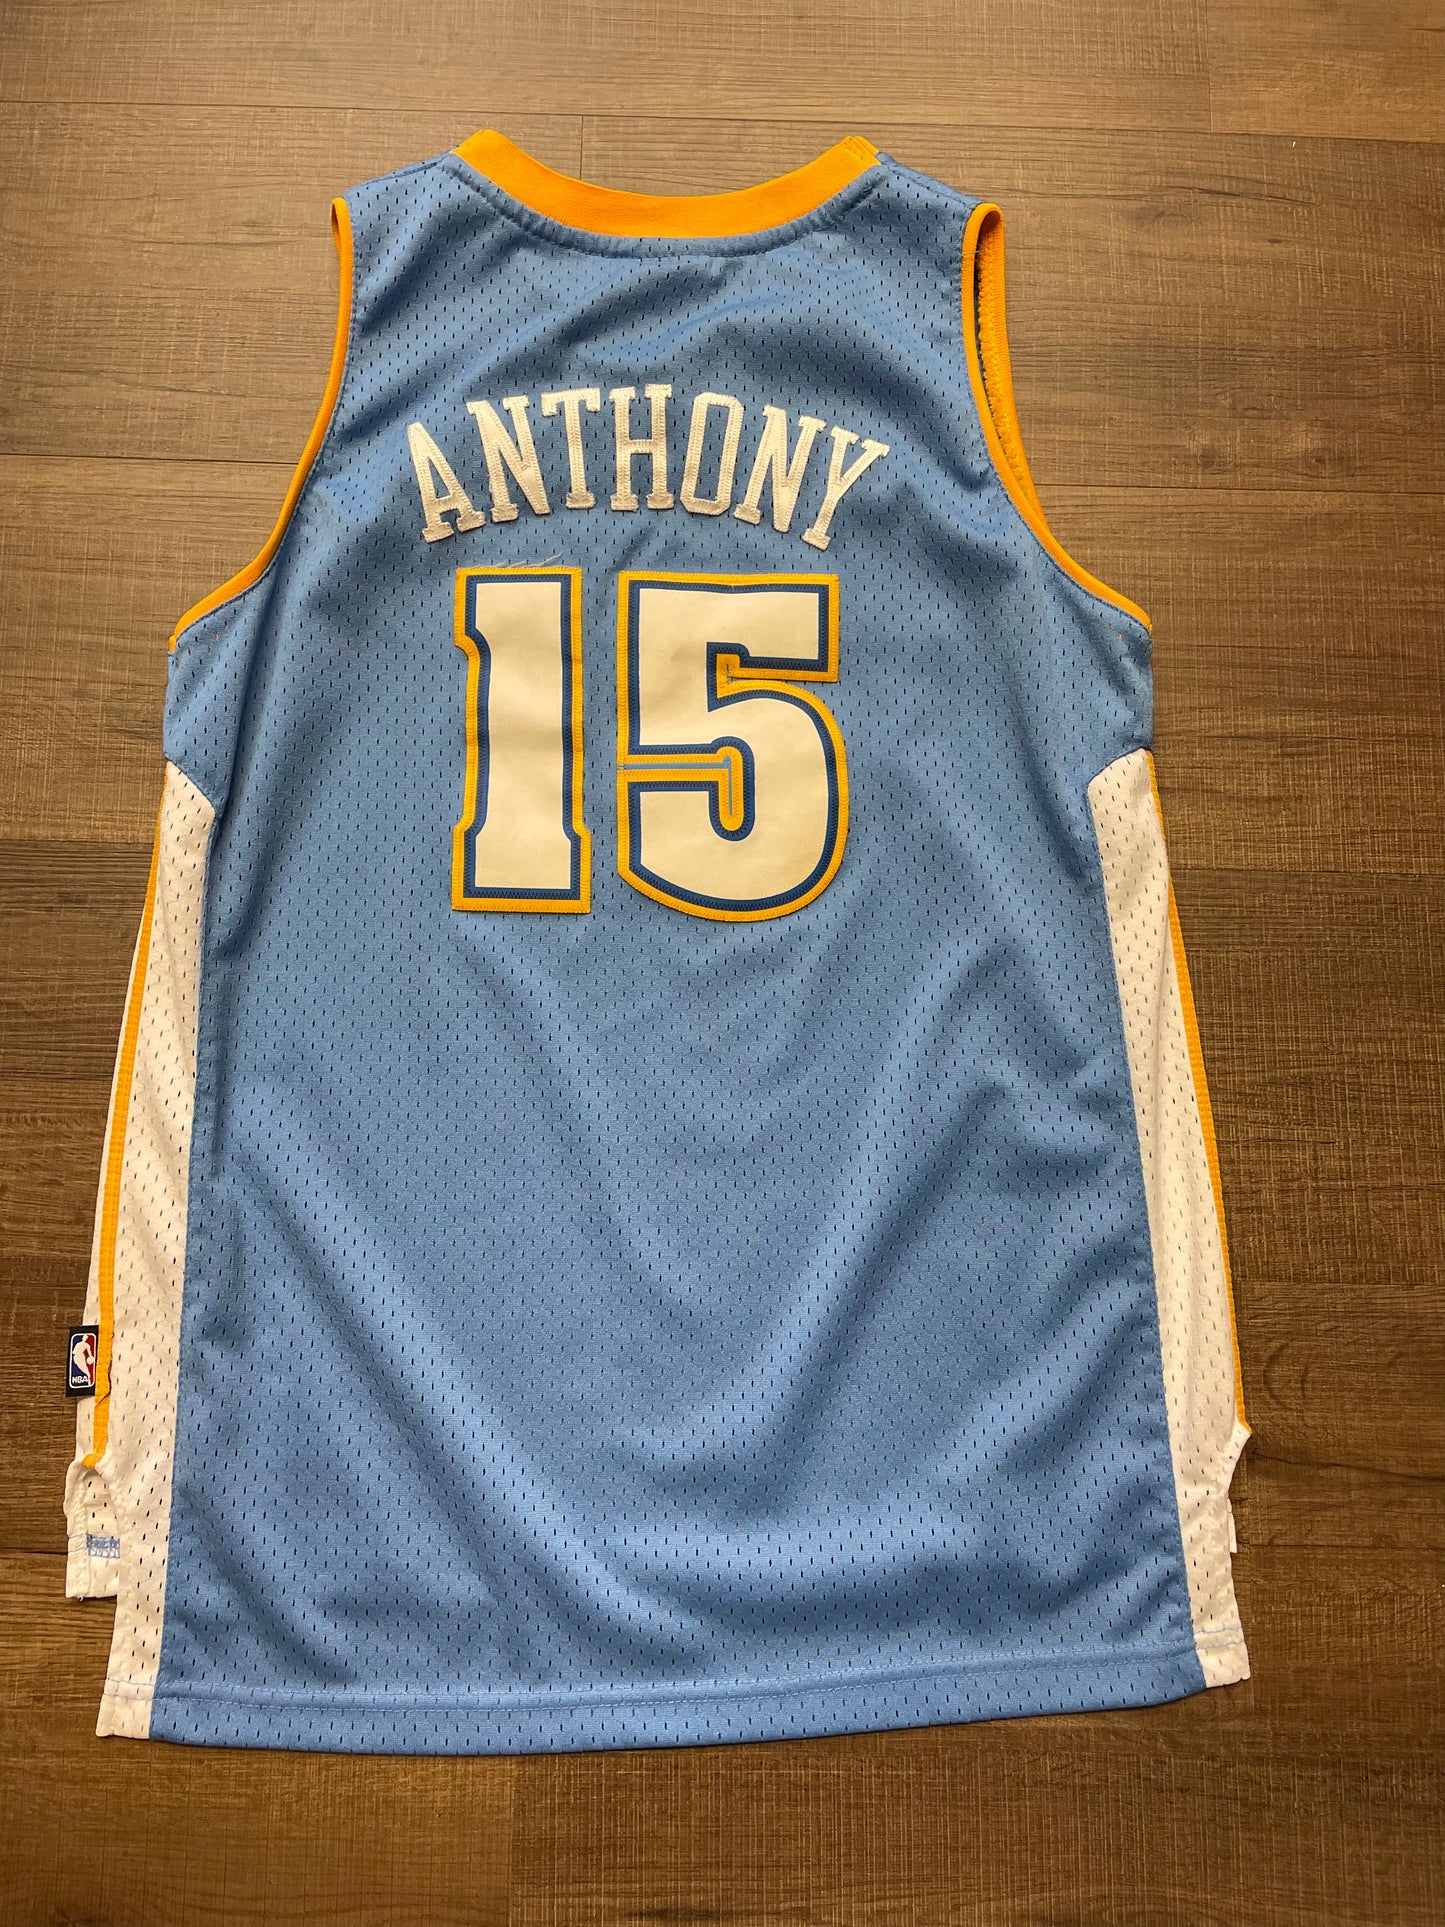 Reebok NBA Denver Nuggets Carmelo Anthony #15 Jersey (YLG)